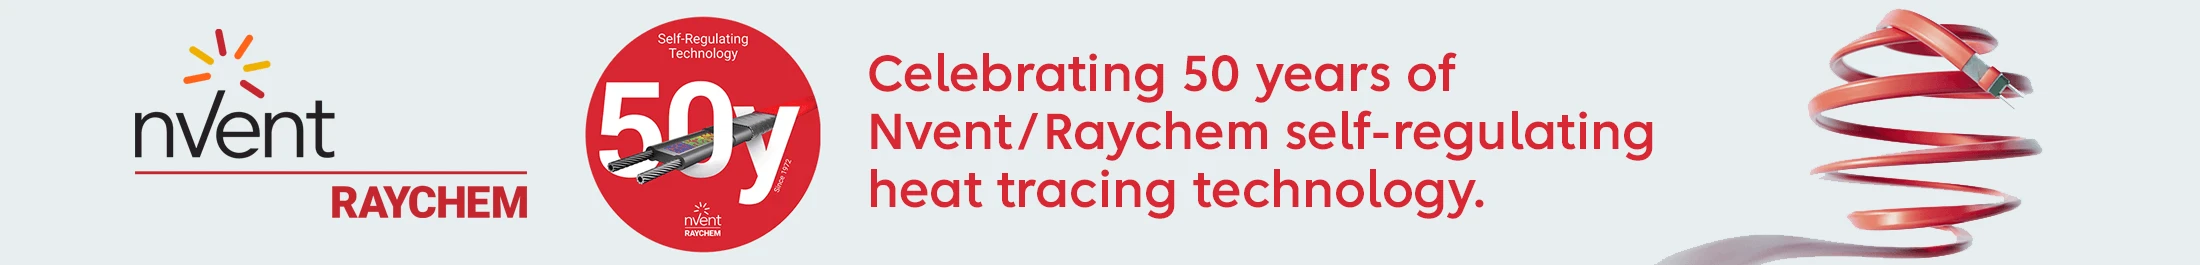 Celebrating 50 years of Raychem/Nvent